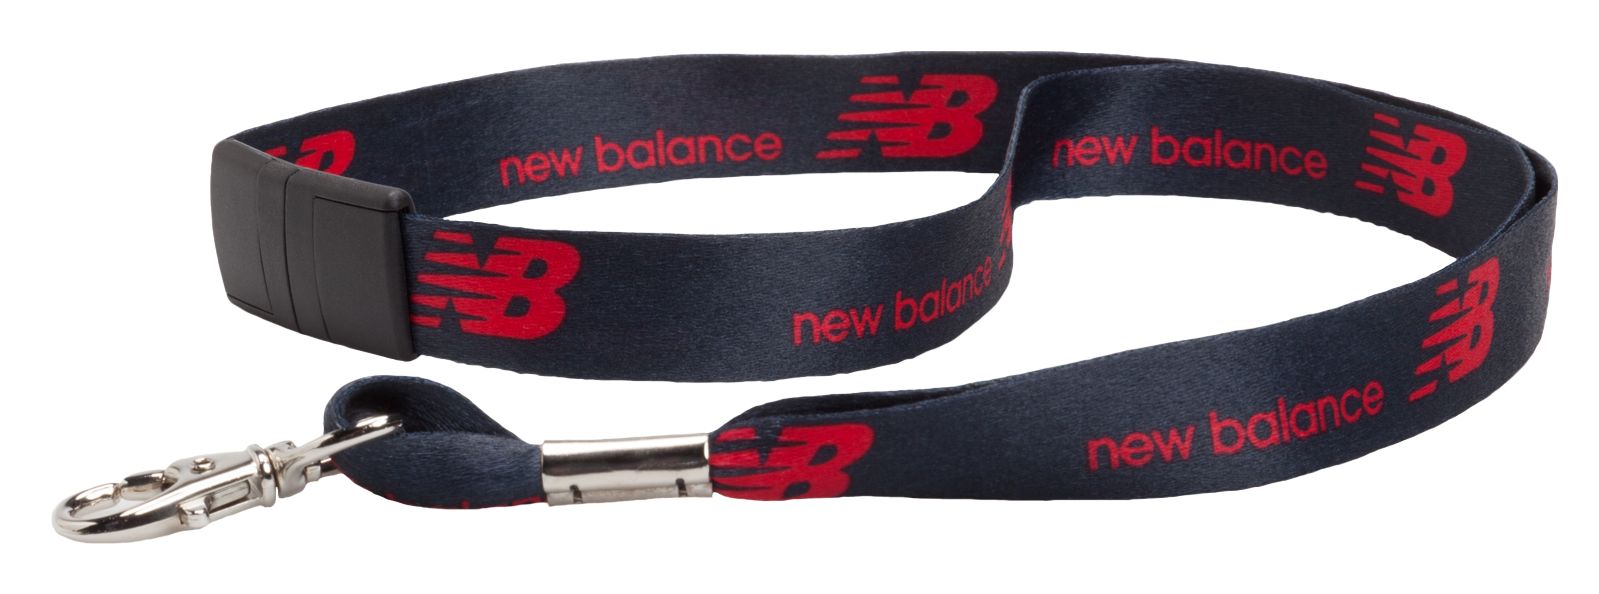 new balance wristbands